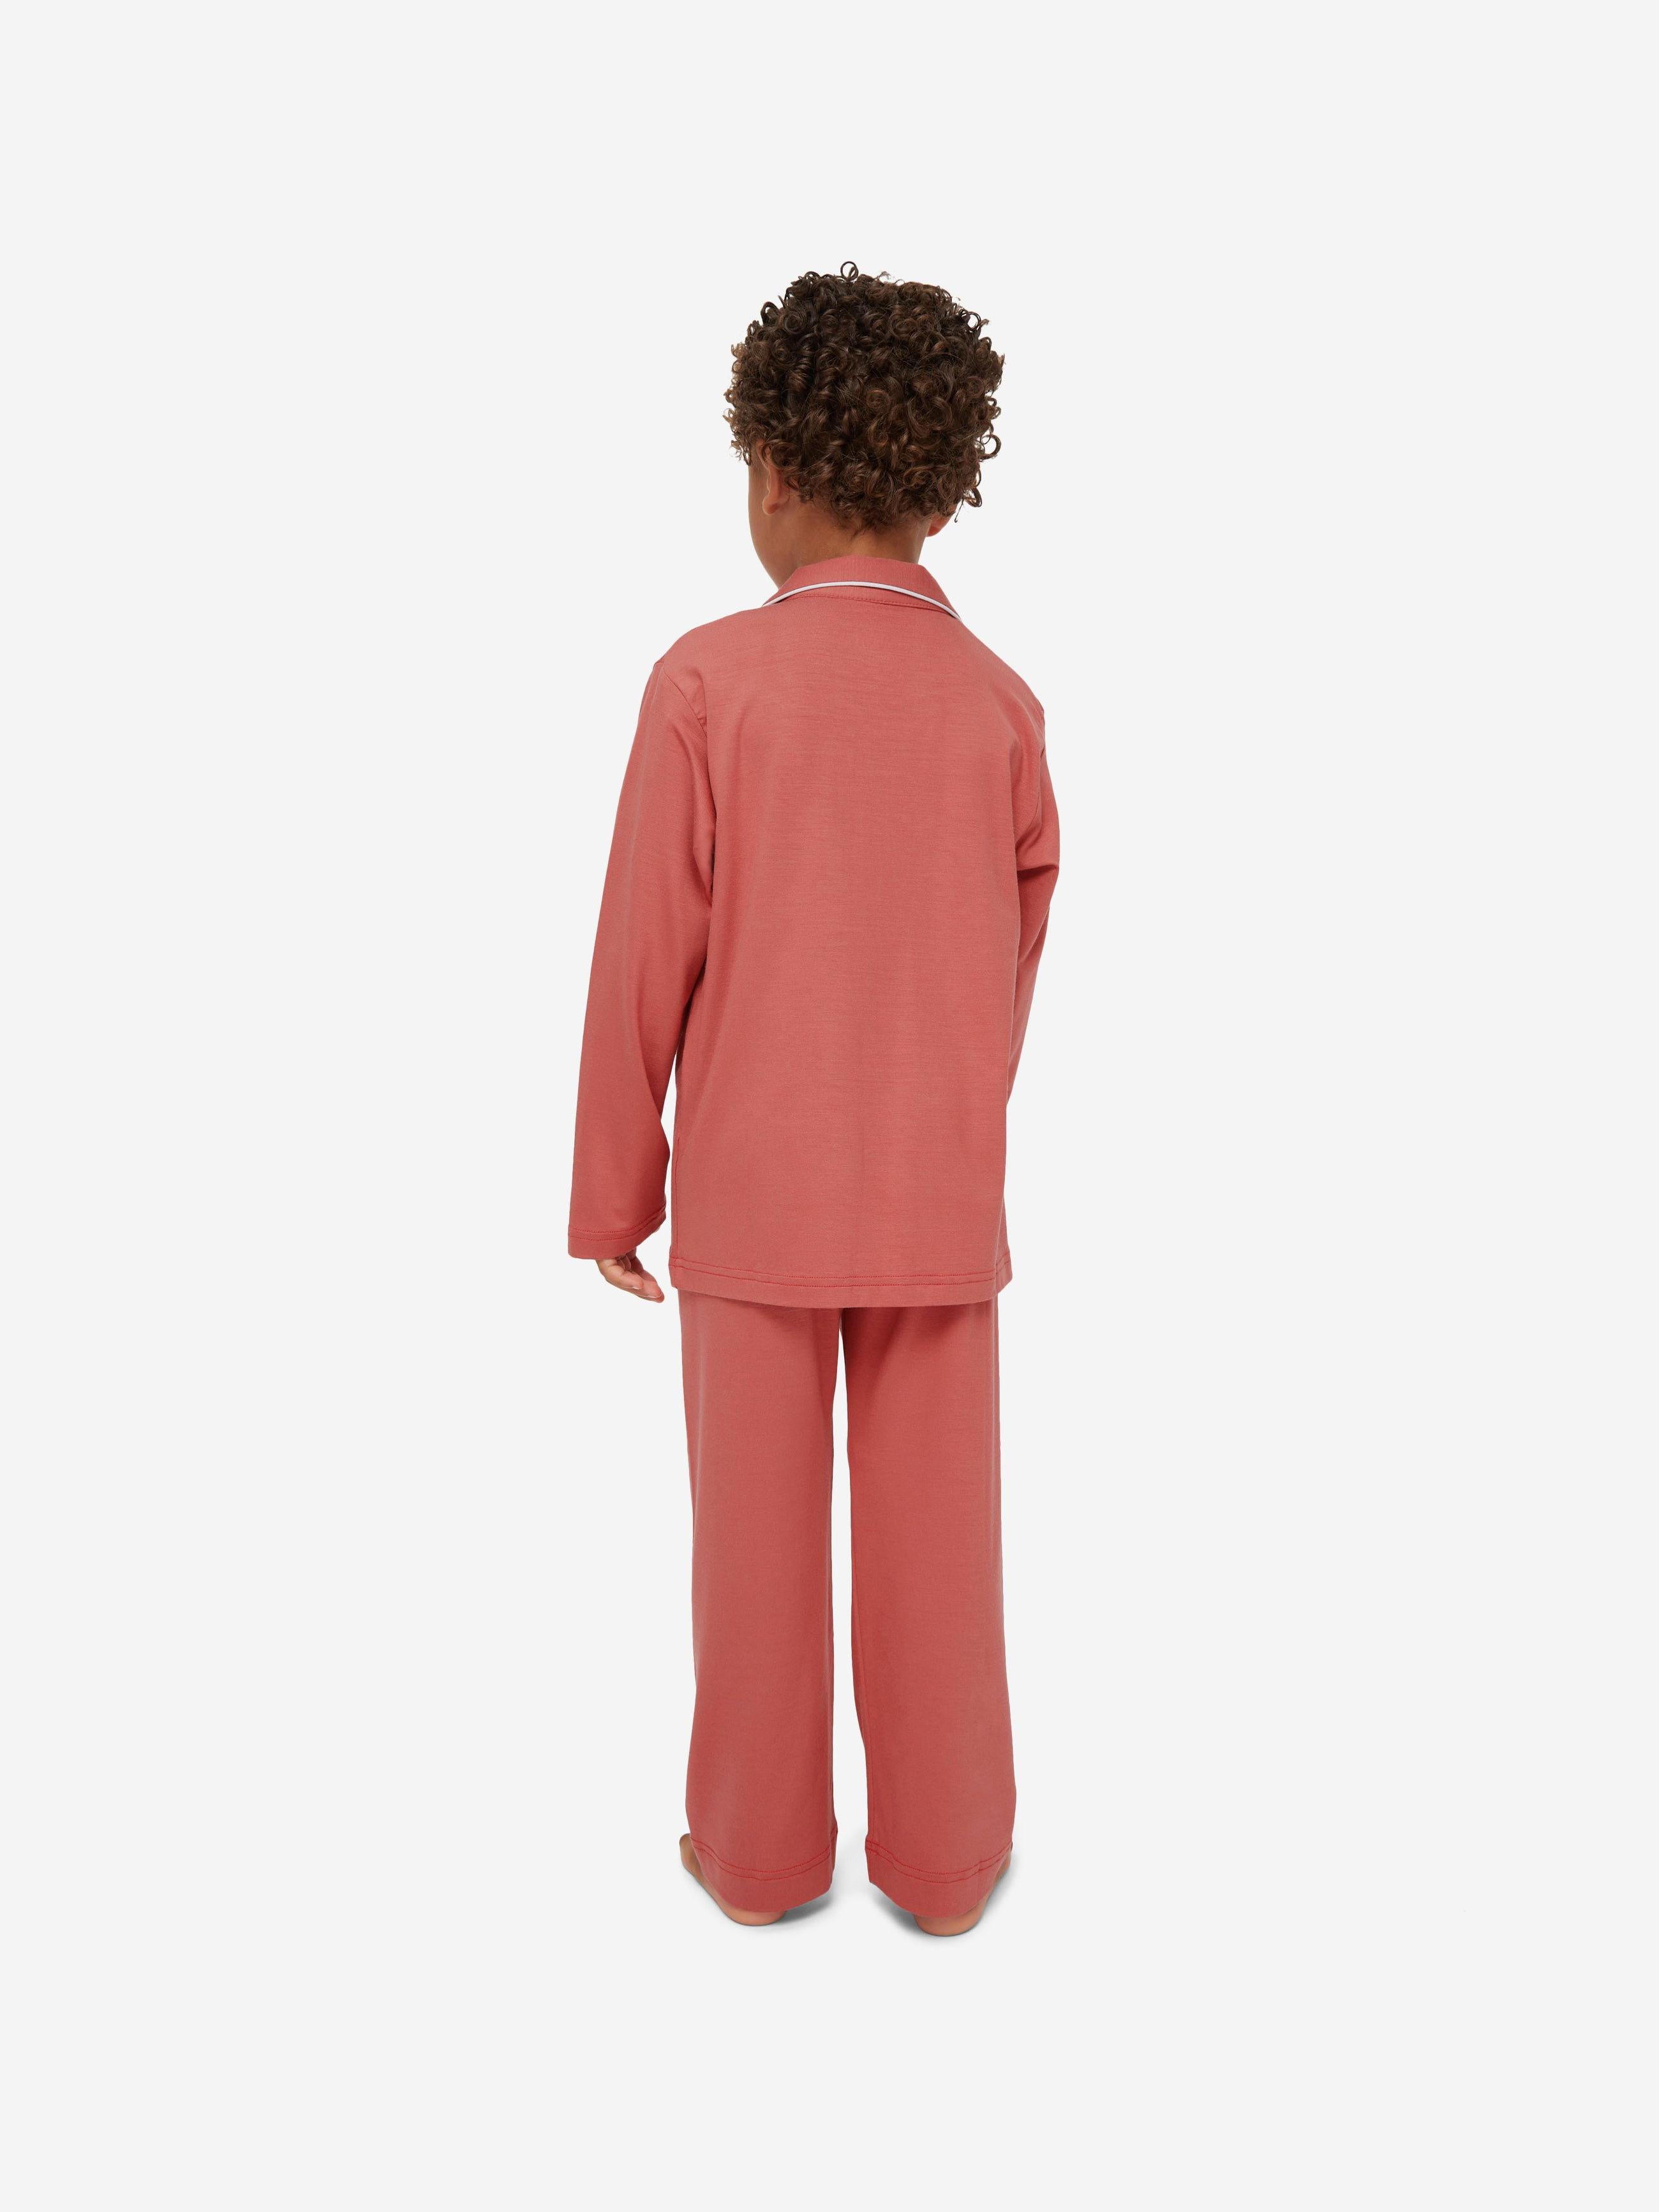 Kids' Pyjamas Basel Micro Modal Stretch Soft  Cedar